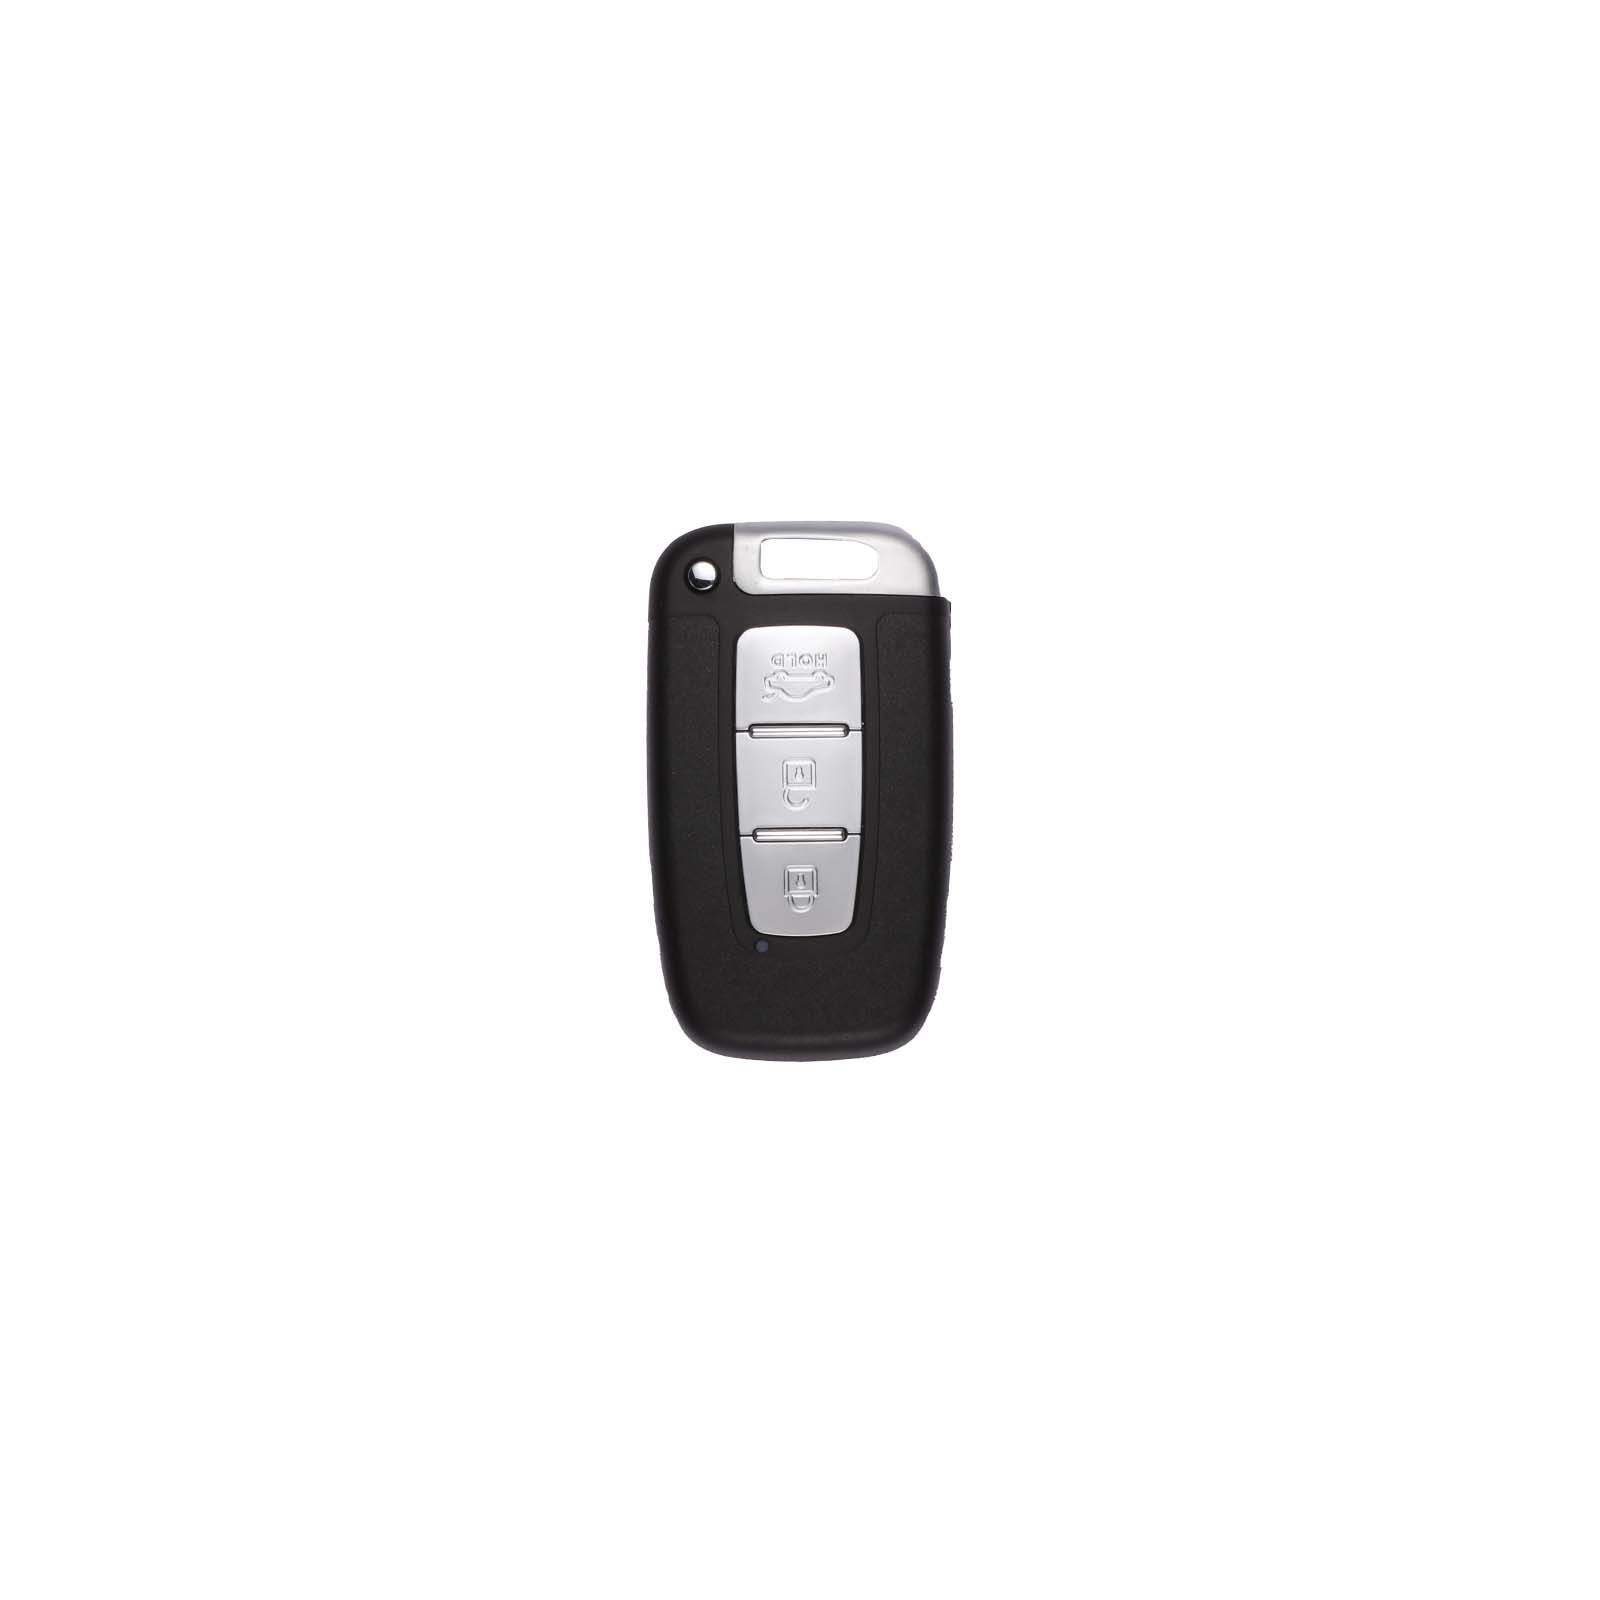 AUTEL IKEYHY003AL Hyundai 3 Tasten Universal Smart Key 5pcs/lot